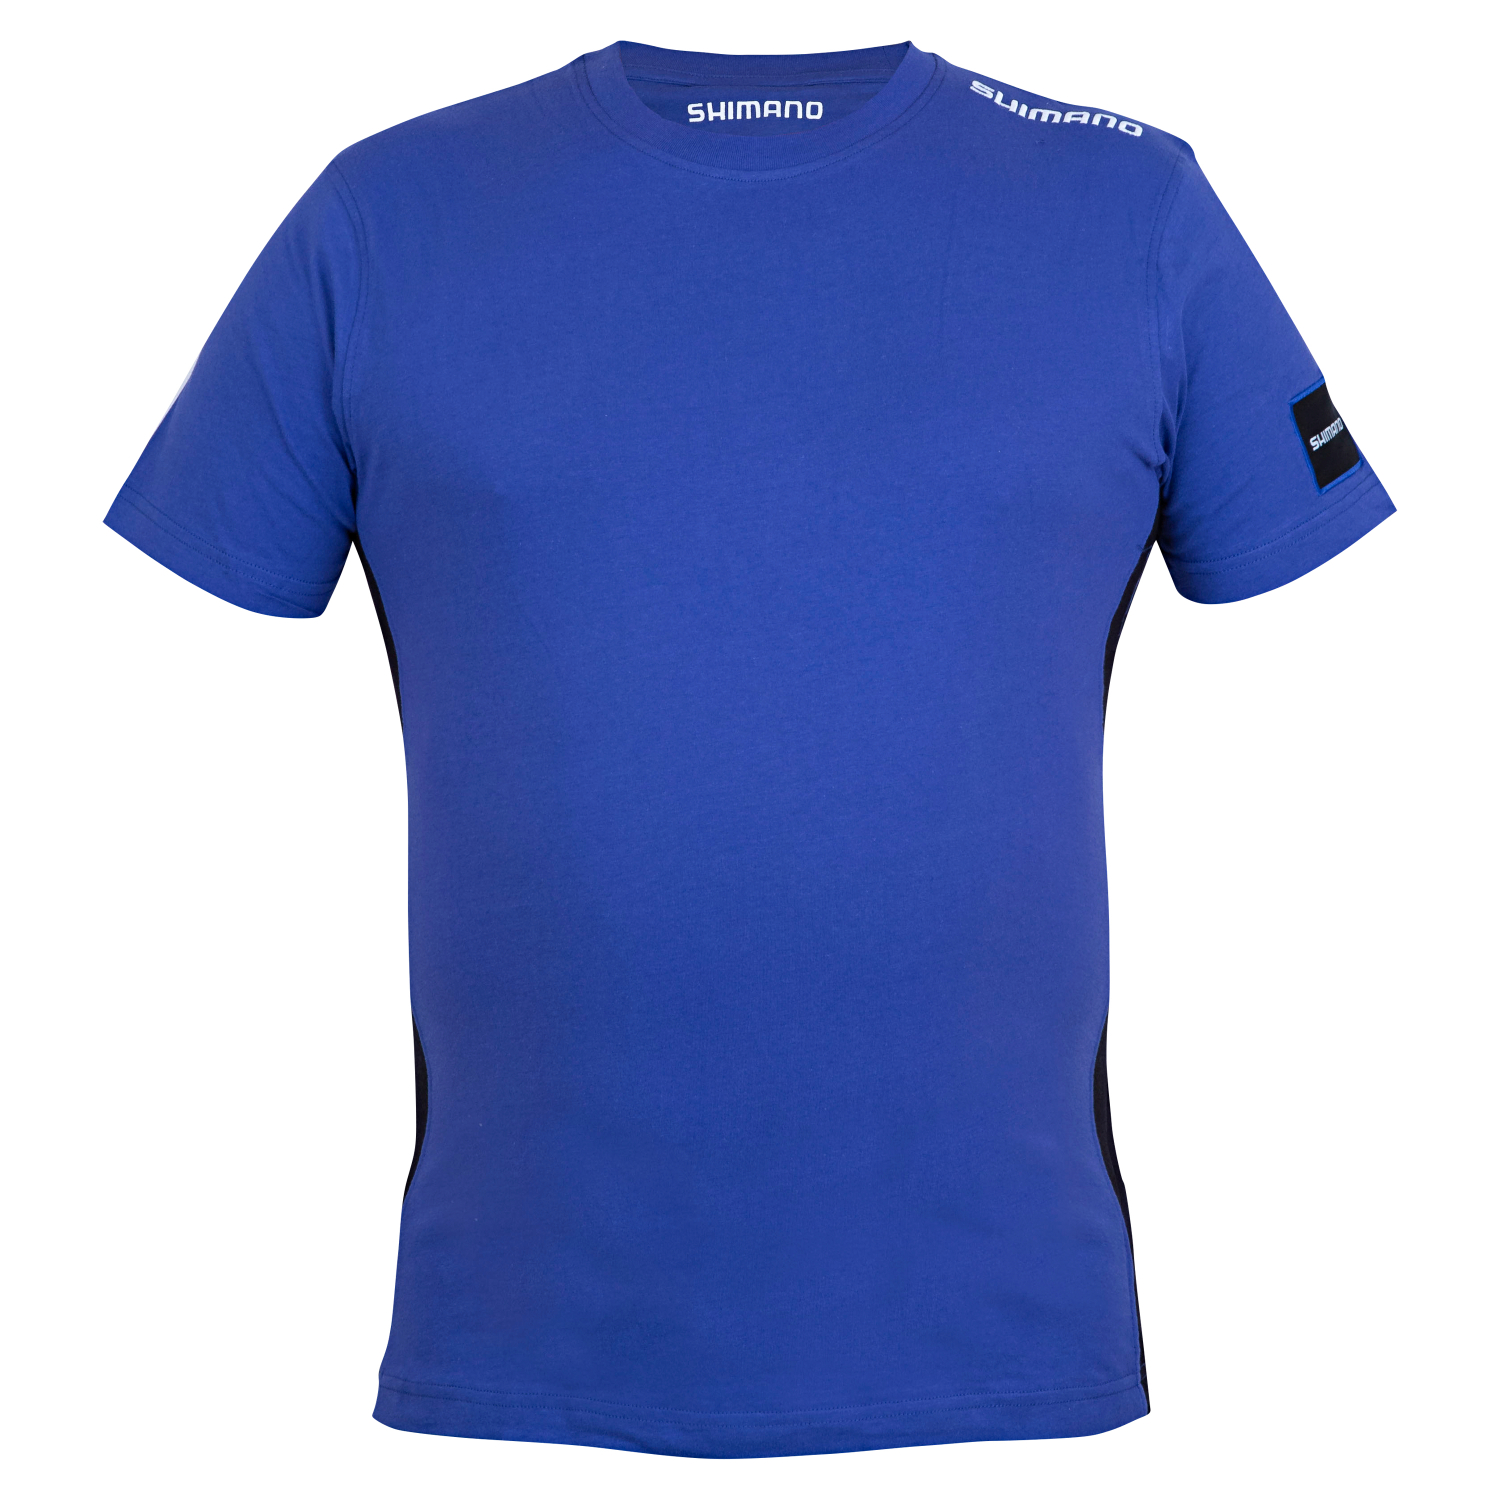 Shimano Herren T-Shirt (Royal Blue) Gr. 2XL 